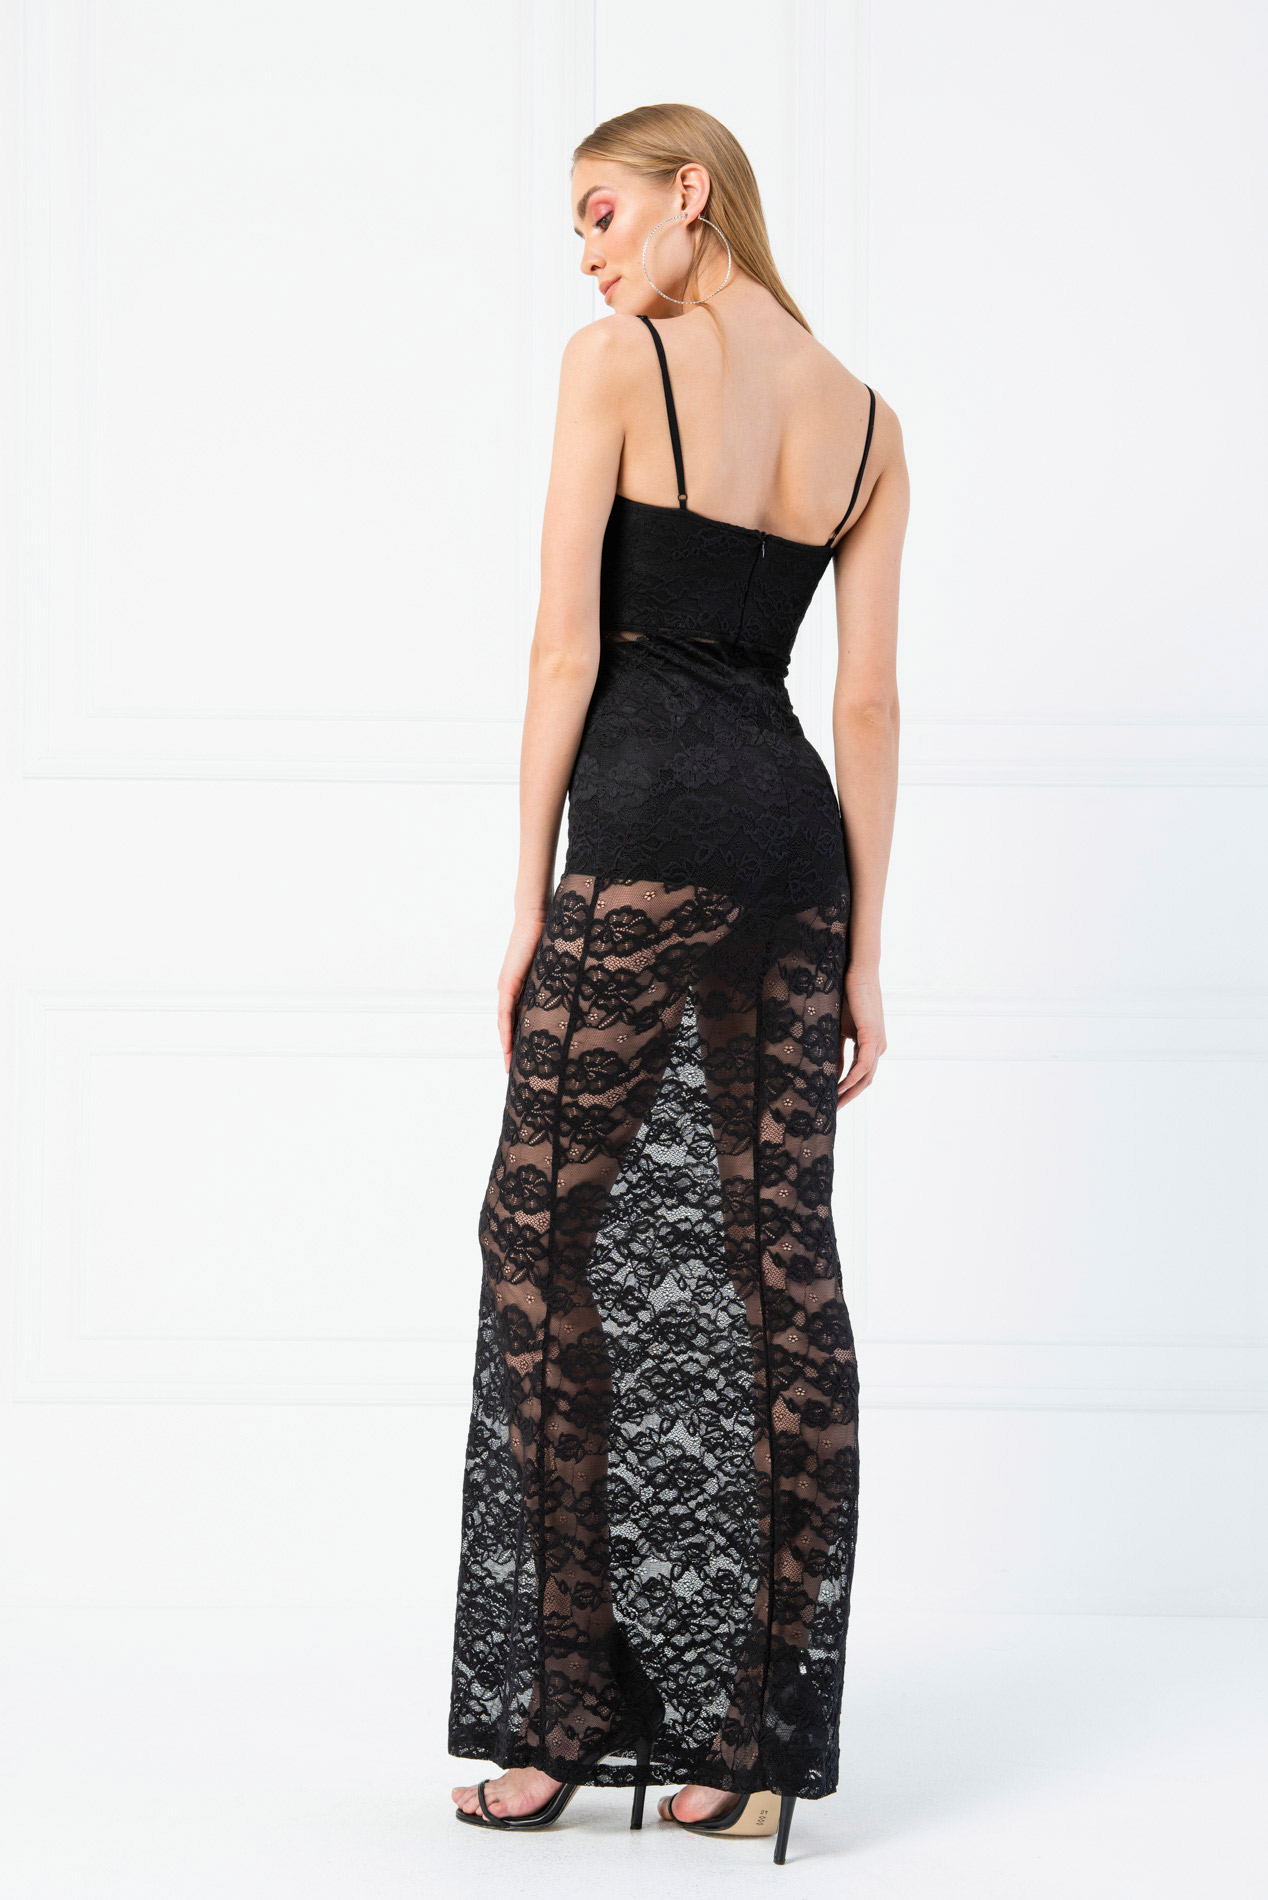 Wholesale Sheer Black Lace Cami Maxi Dress